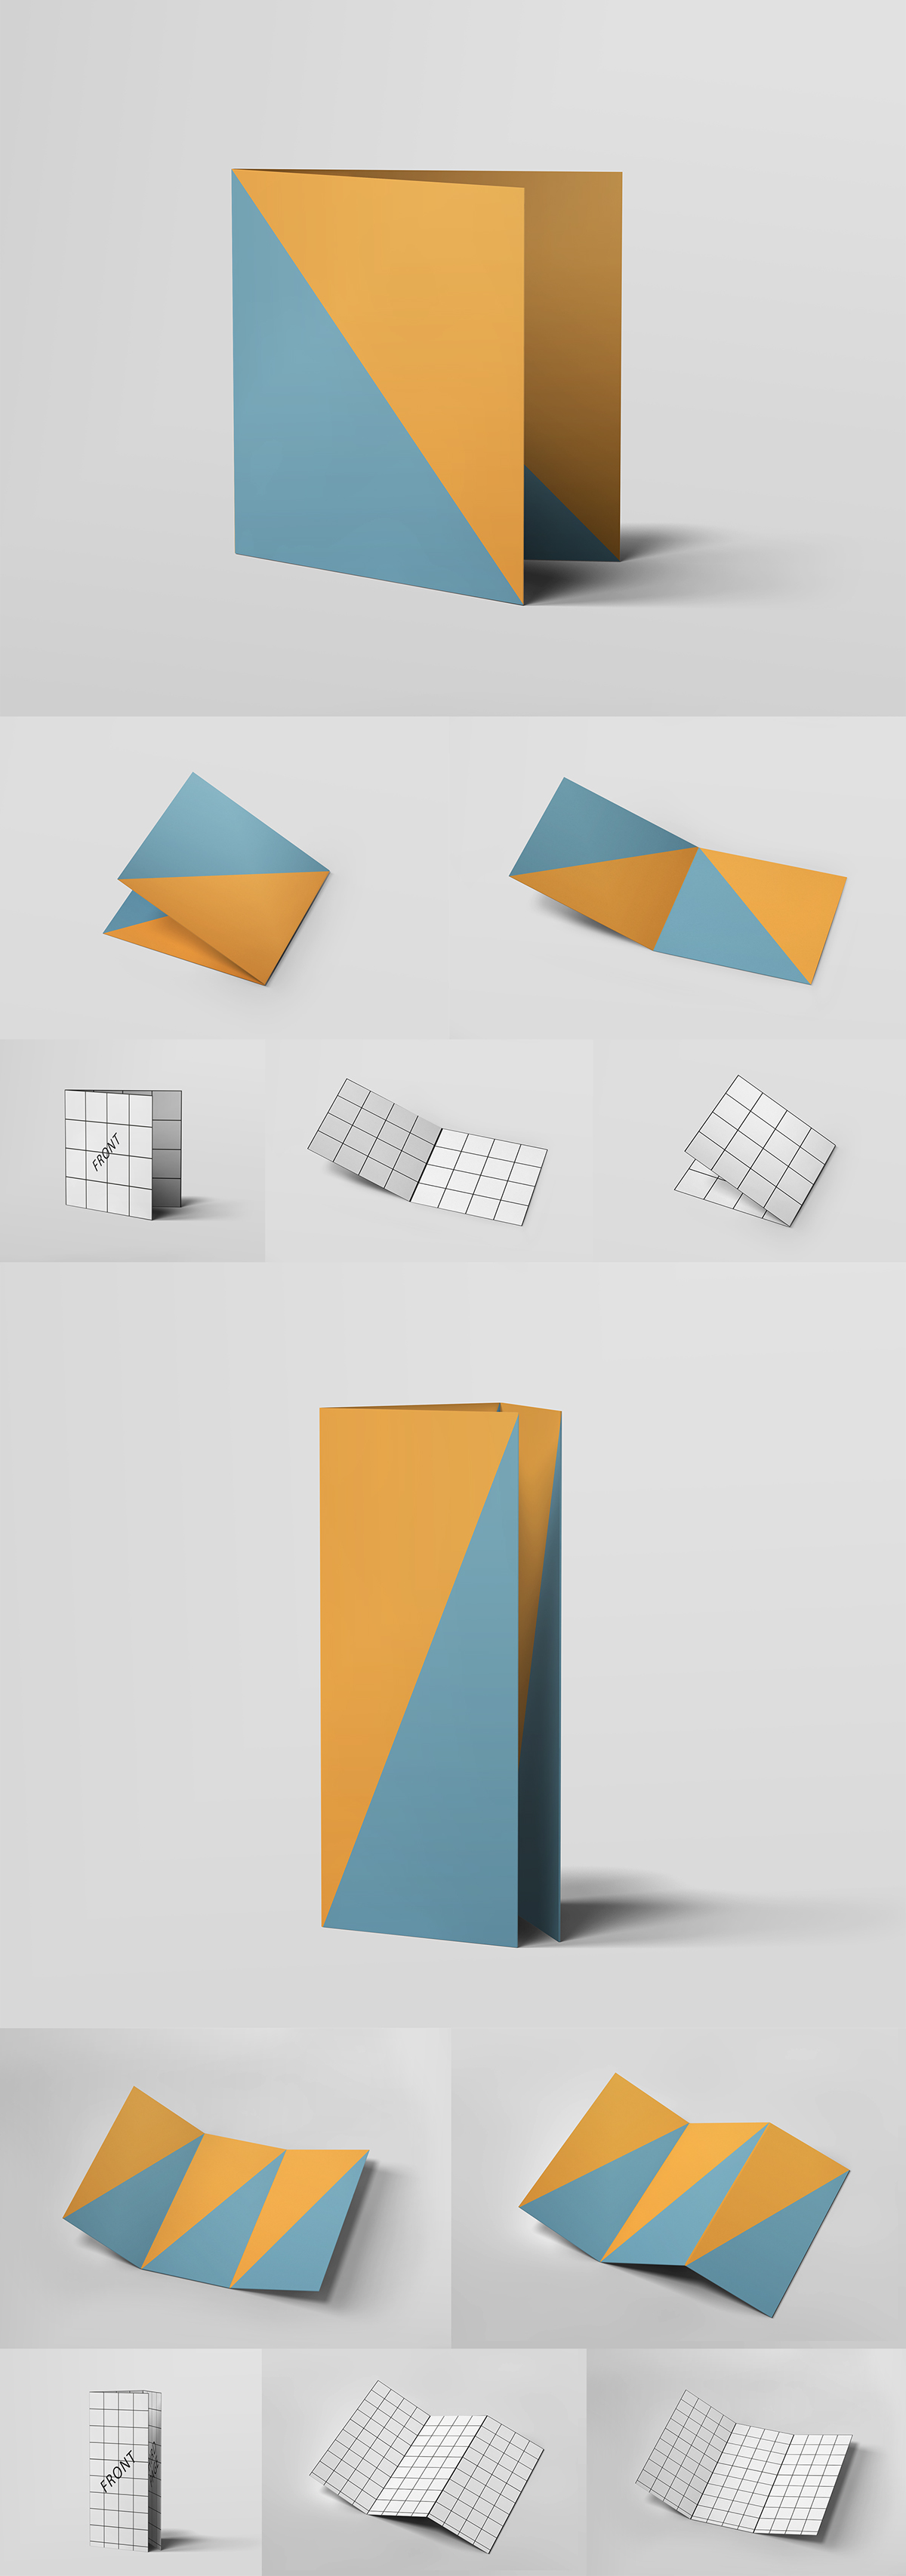 Mockup mockups Smart object inspire template brochure folder magazine poster tri fold half fold free to use